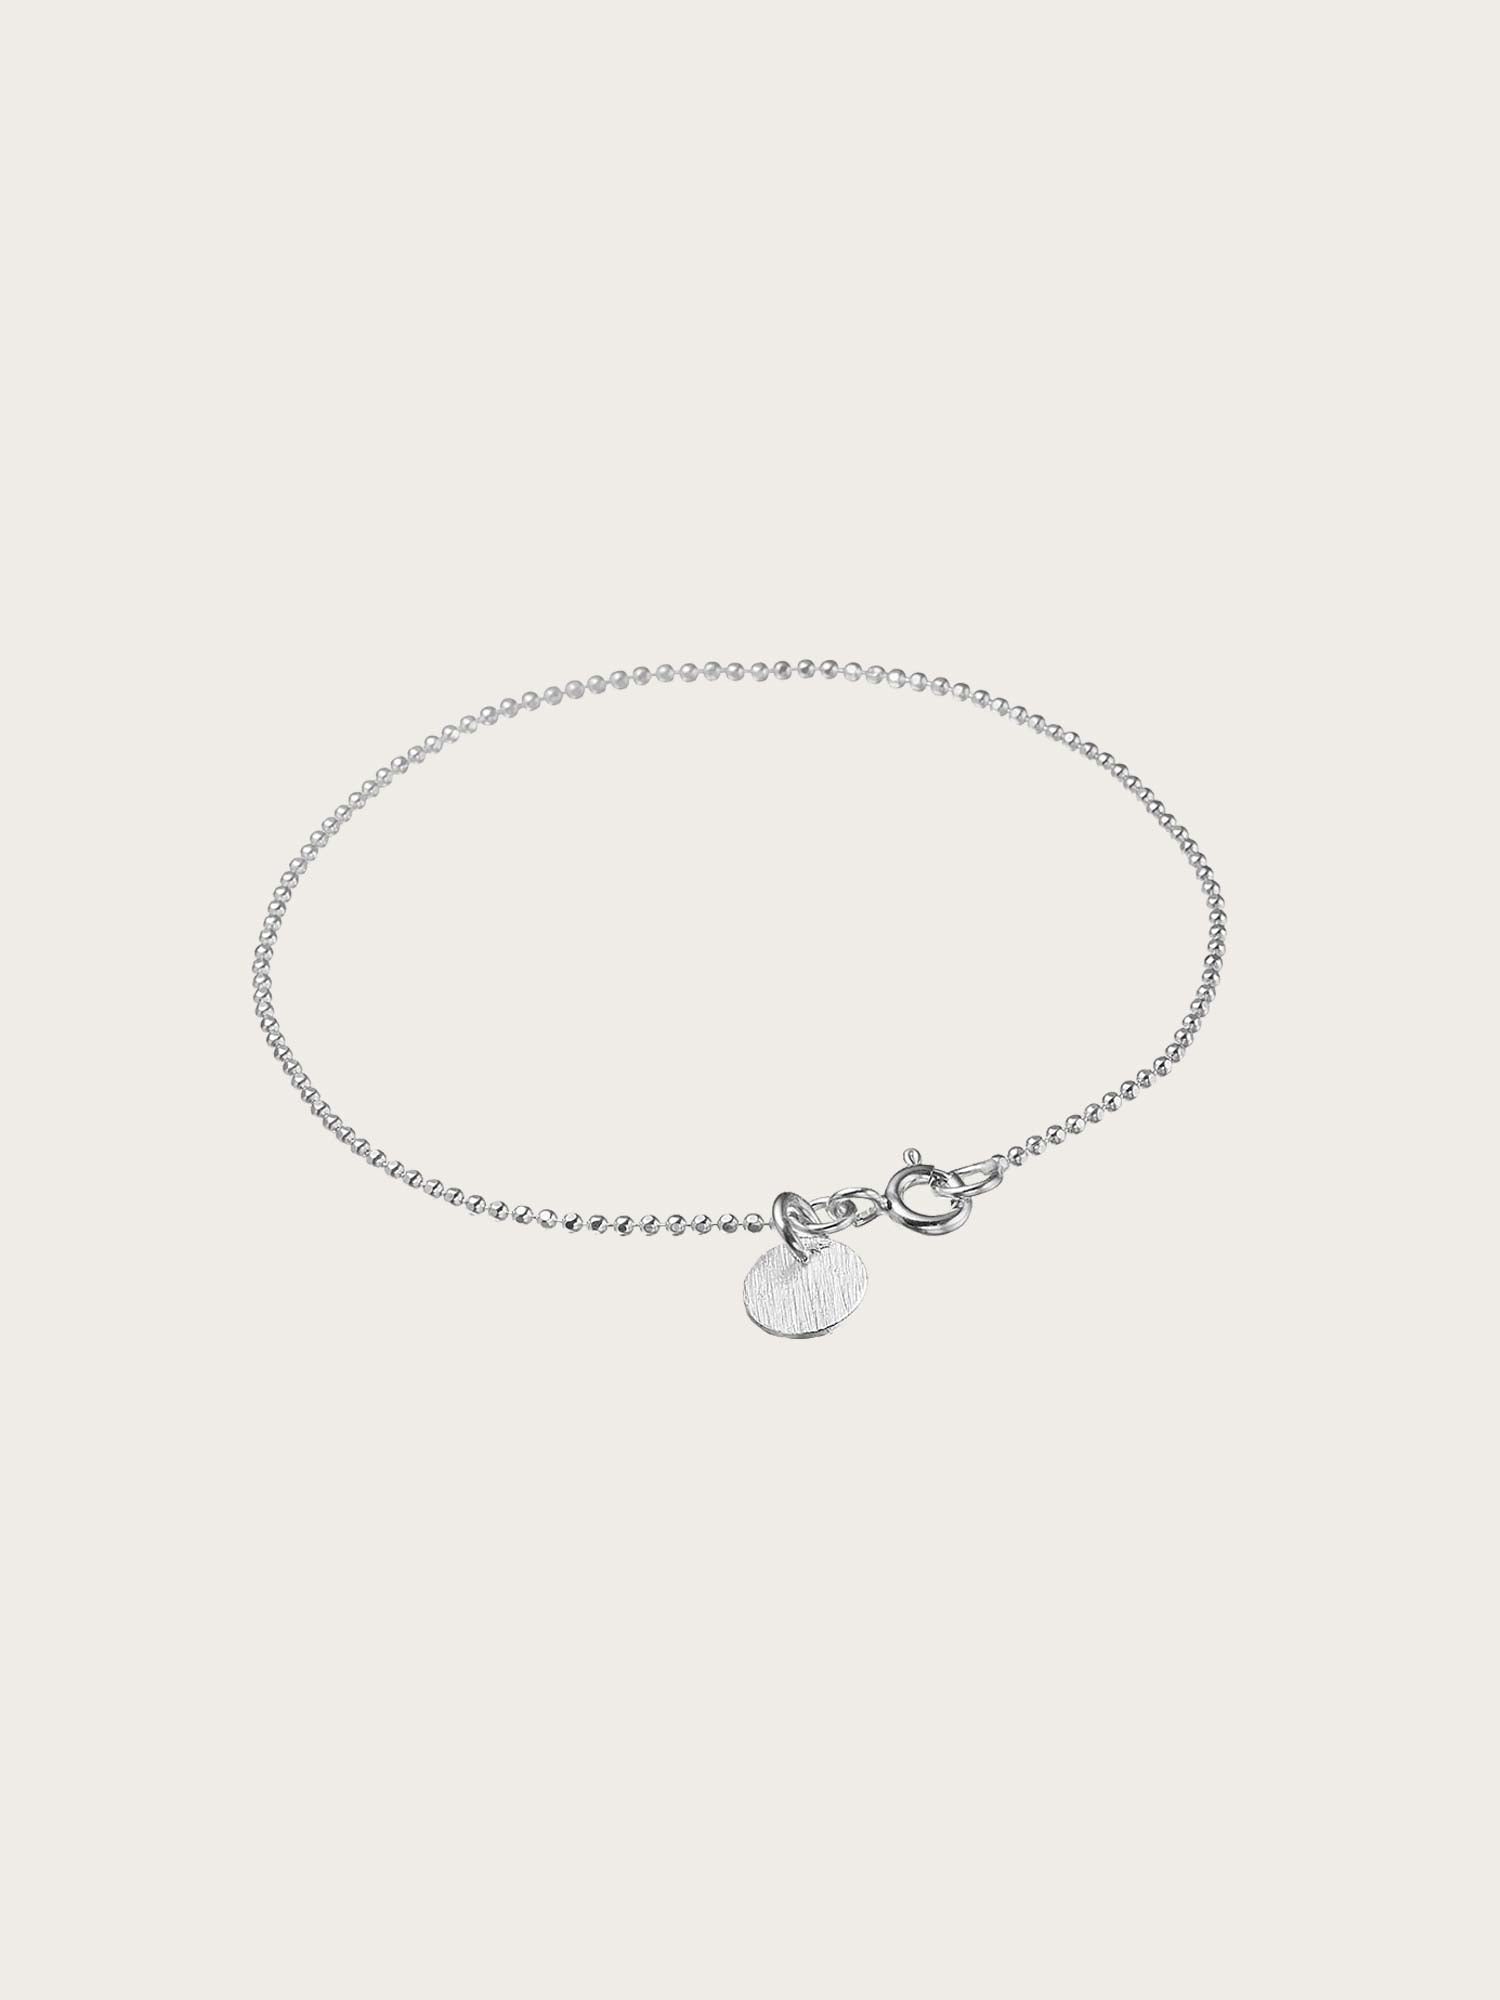 Bracelet Ball Chain - Silver